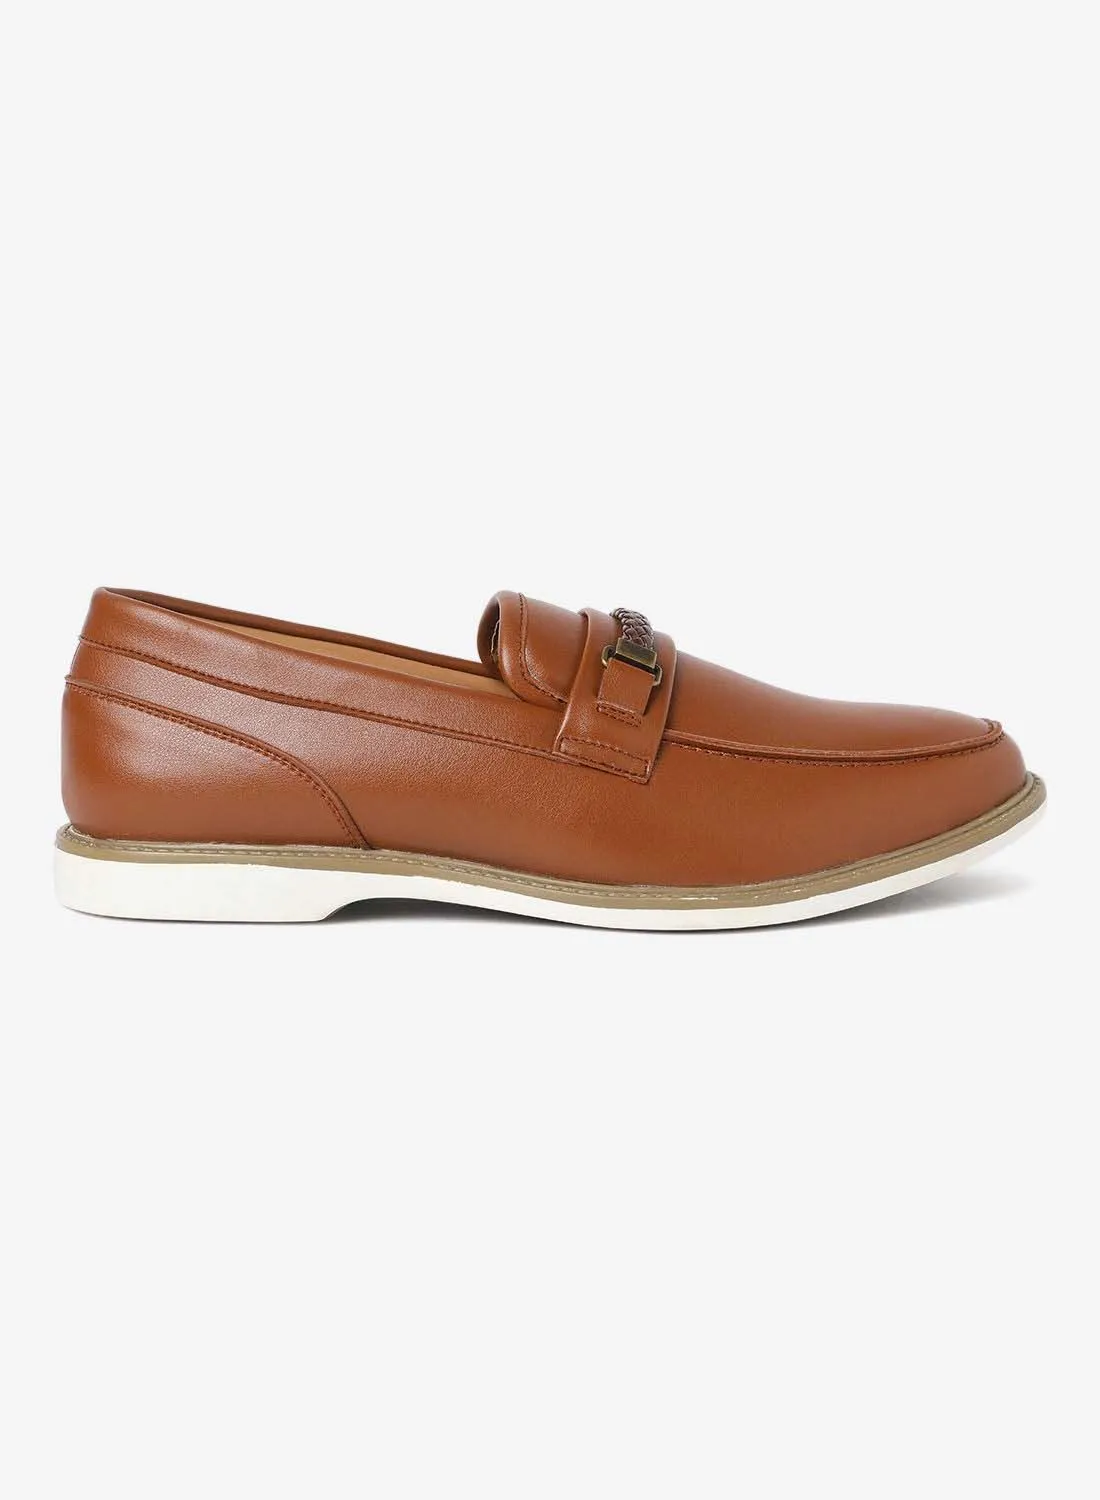 QUWA Casual Flat Slip-On Shoes Tan